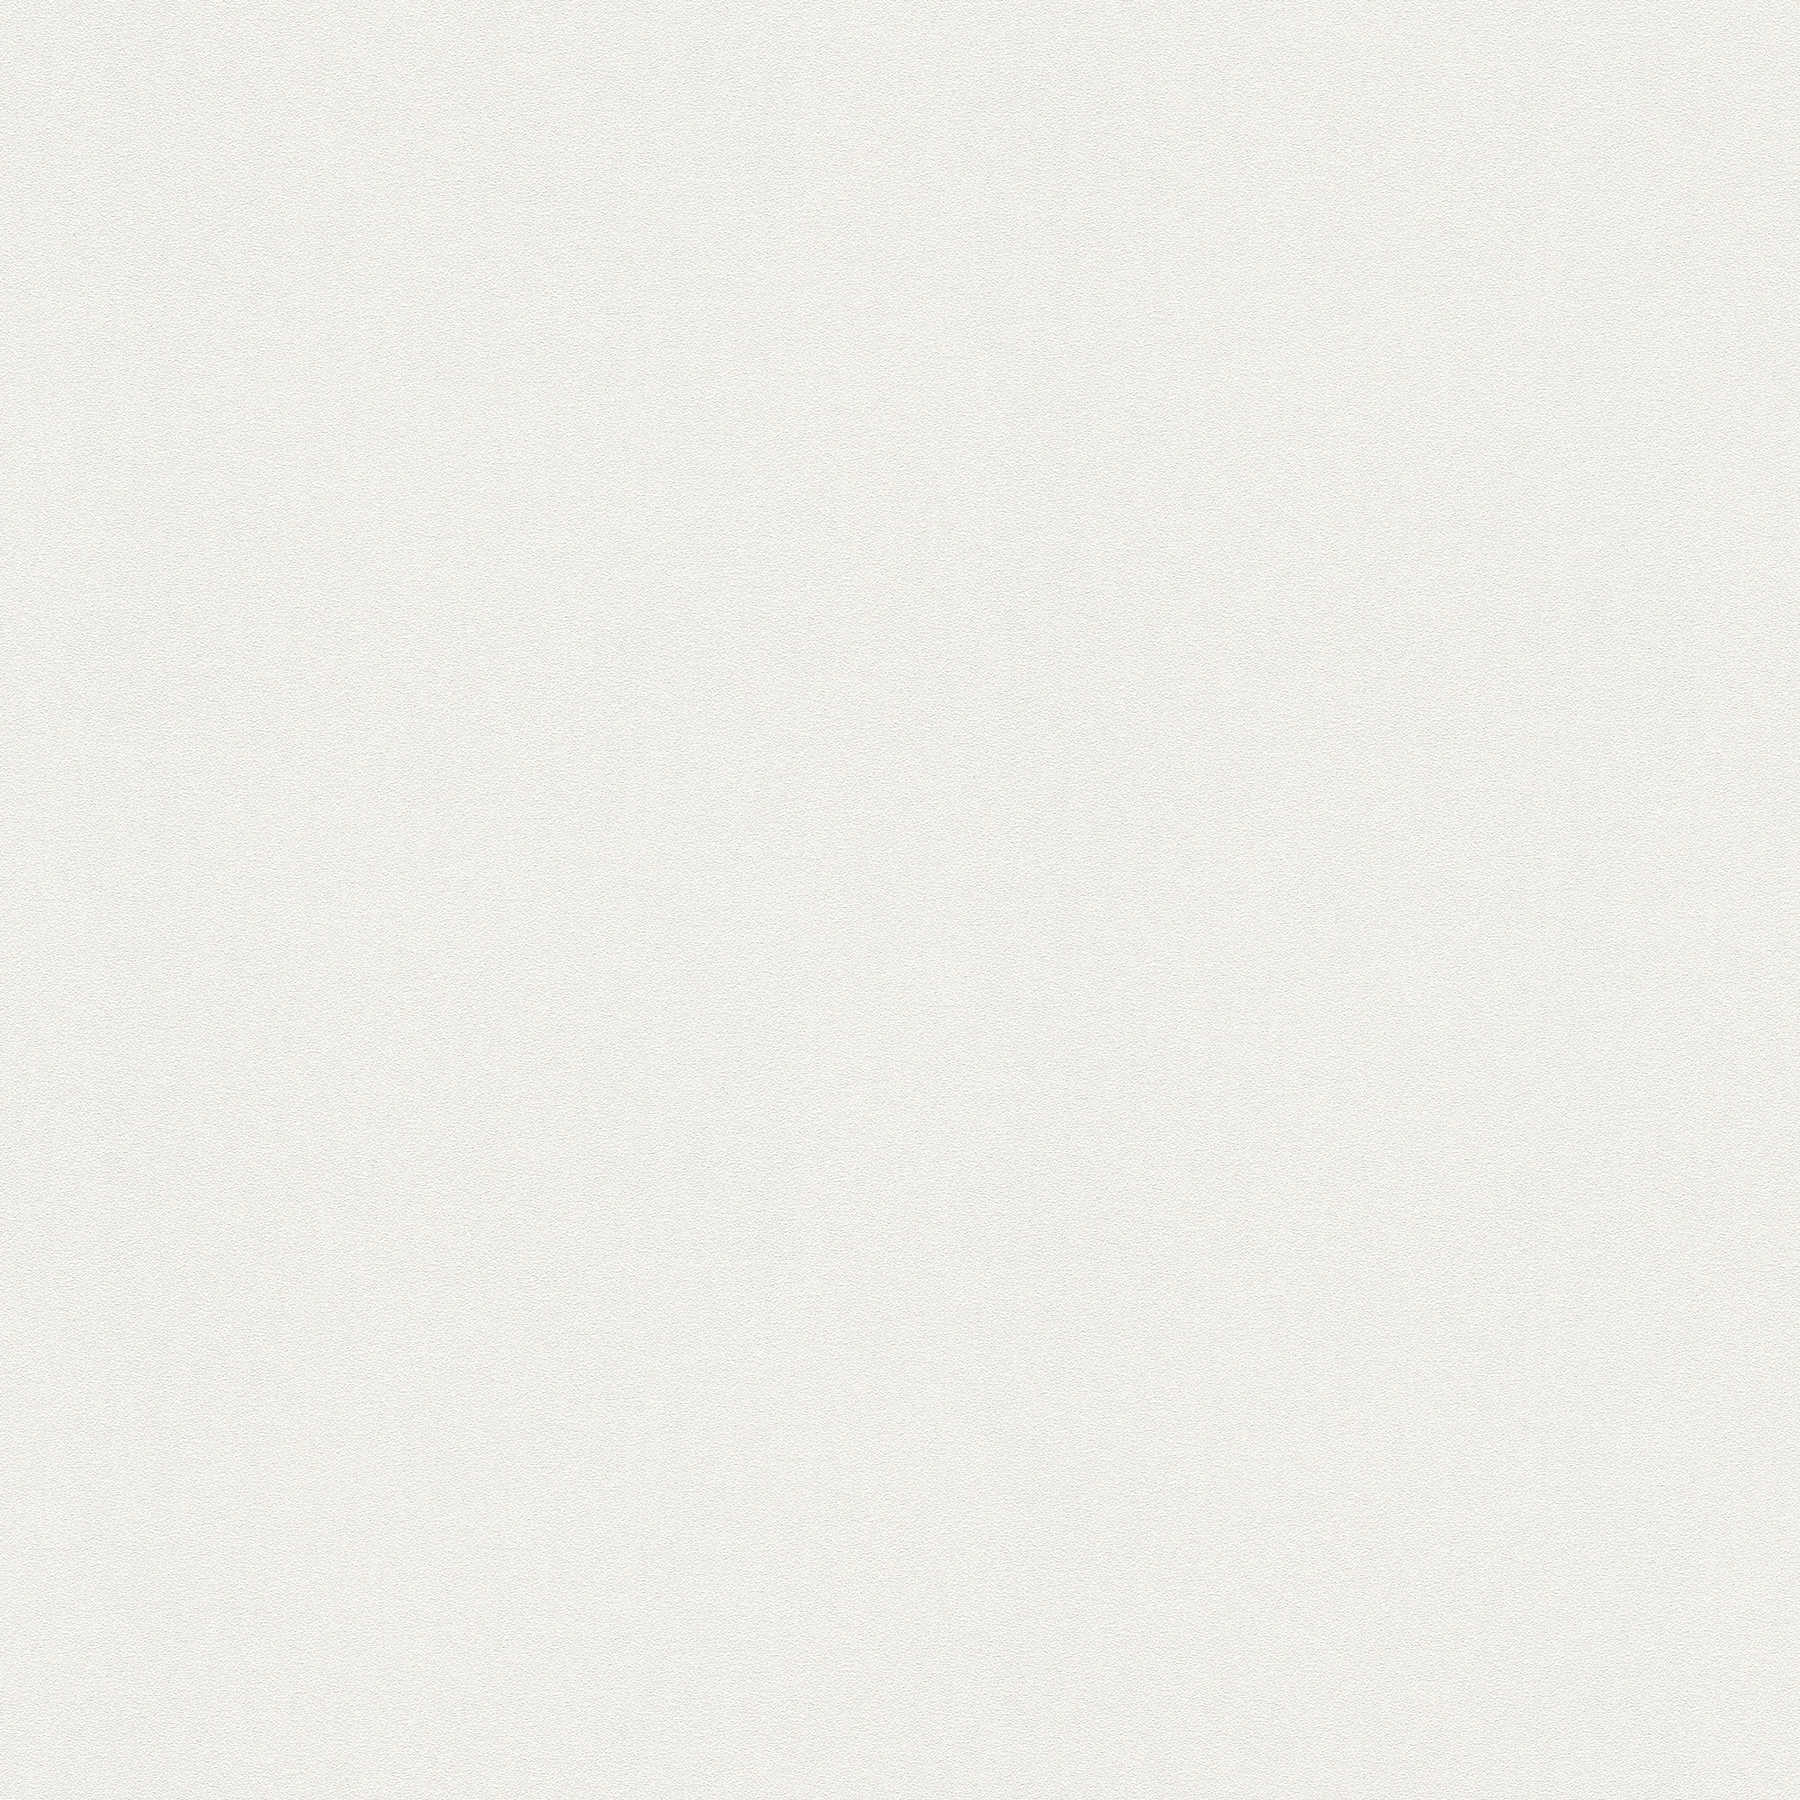 Neutral non-woven wallpaper plain, light & smooth - white
